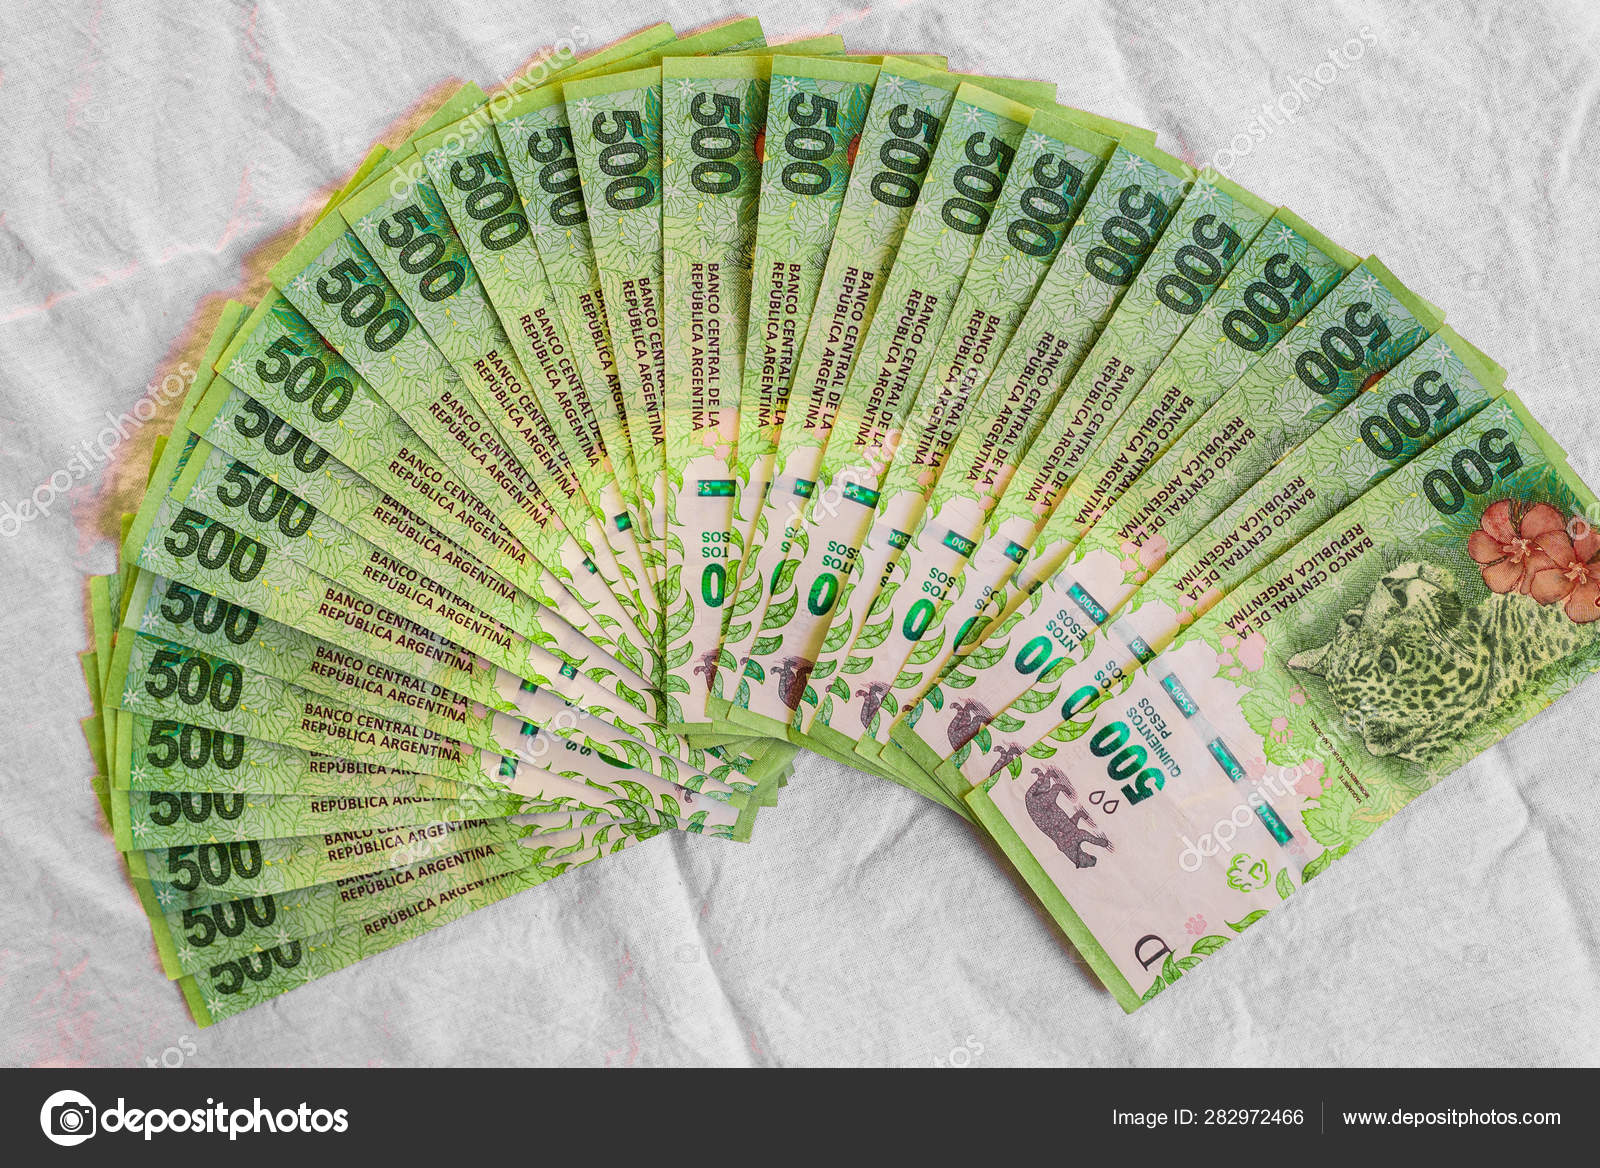 https://st4.depositphotos.com/11899628/28297/i/1600/depositphotos_282972466-stock-photo-close-up-of-argentine-money.jpg